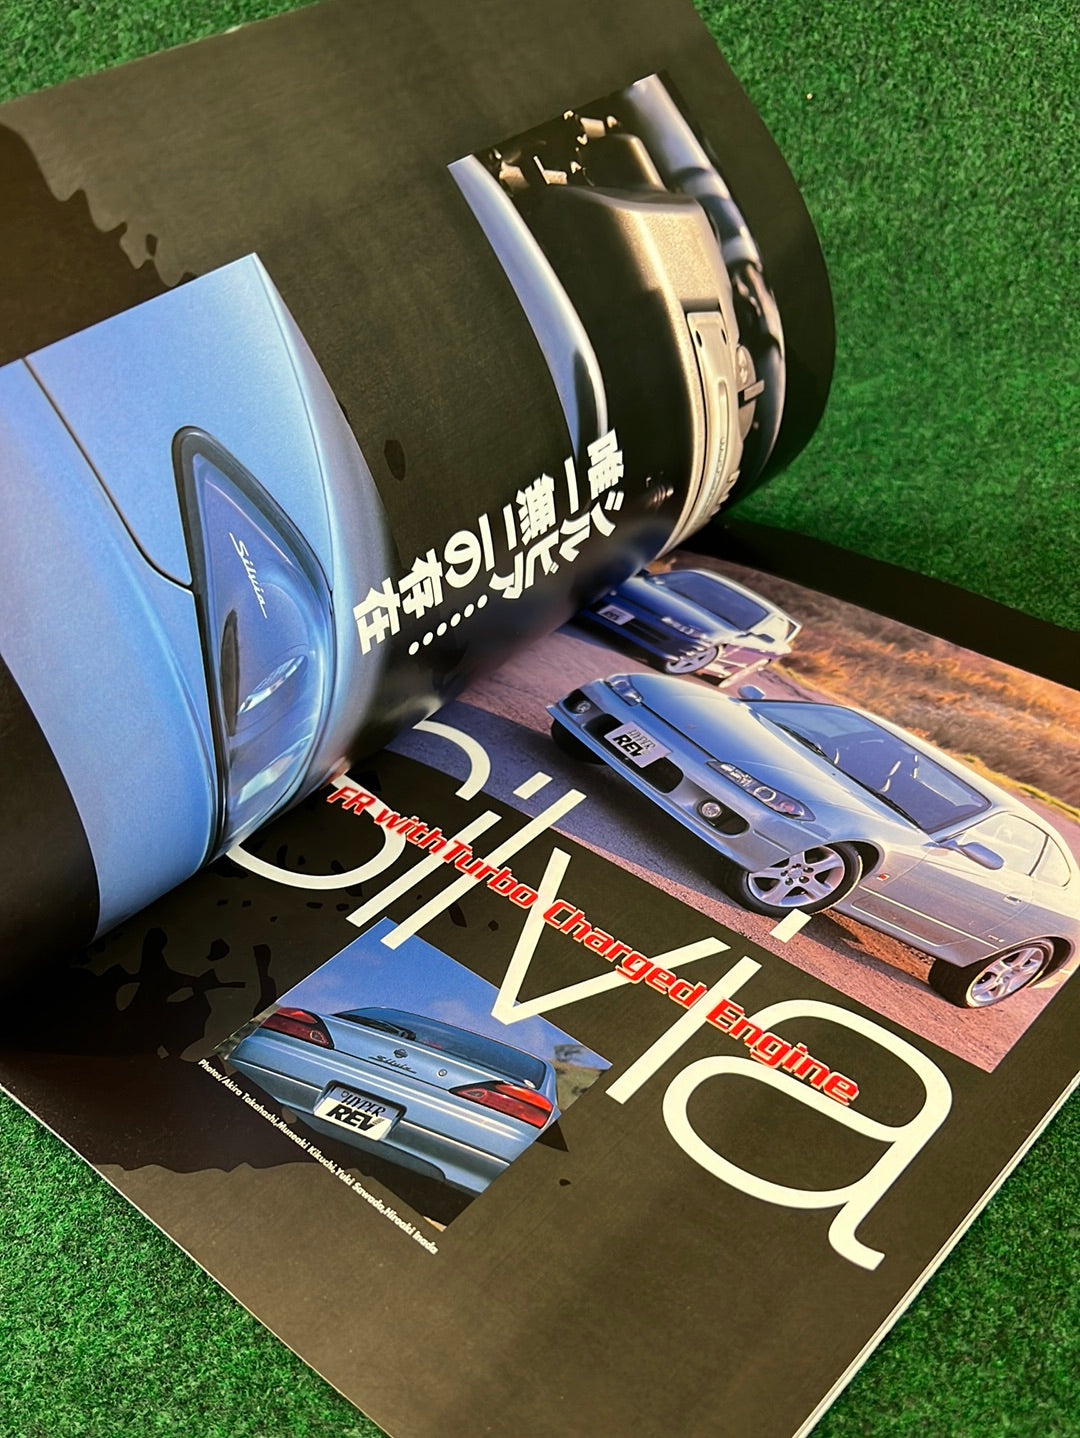 Hyper Rev Magazine - Nissan Silvia - Vol. 49 No.3